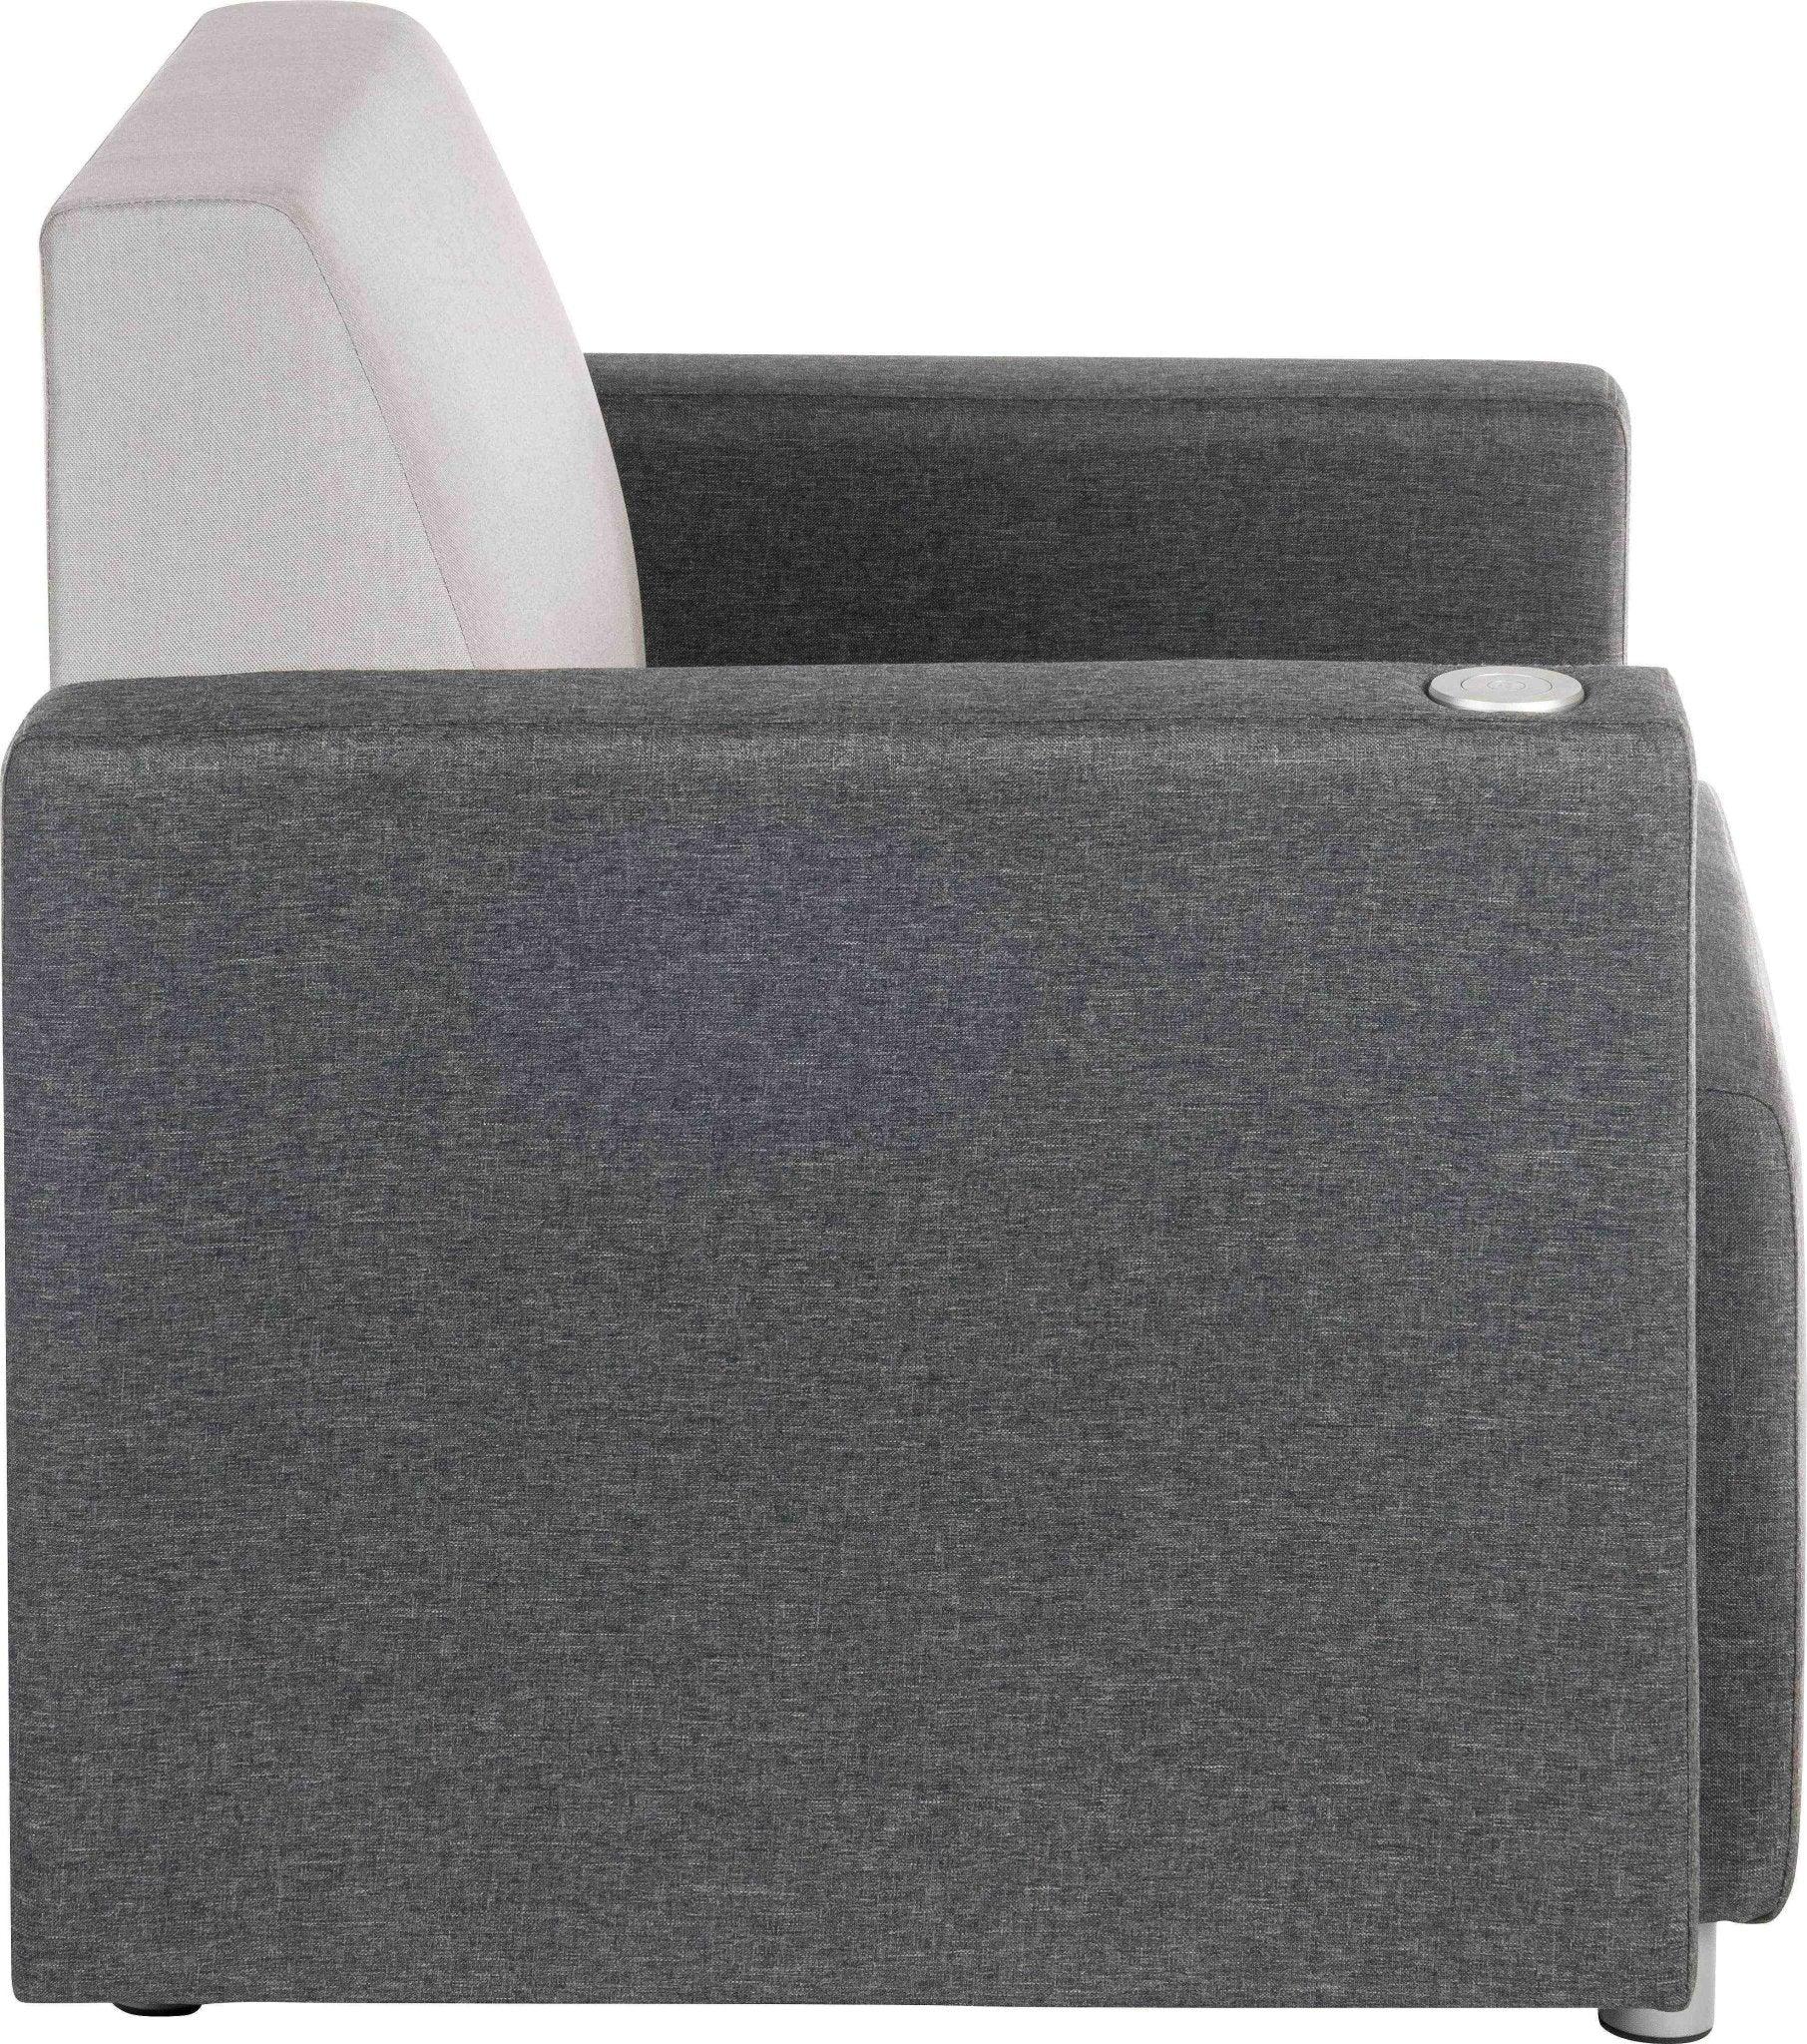 Cube modular reception chair usb arm left - image 4